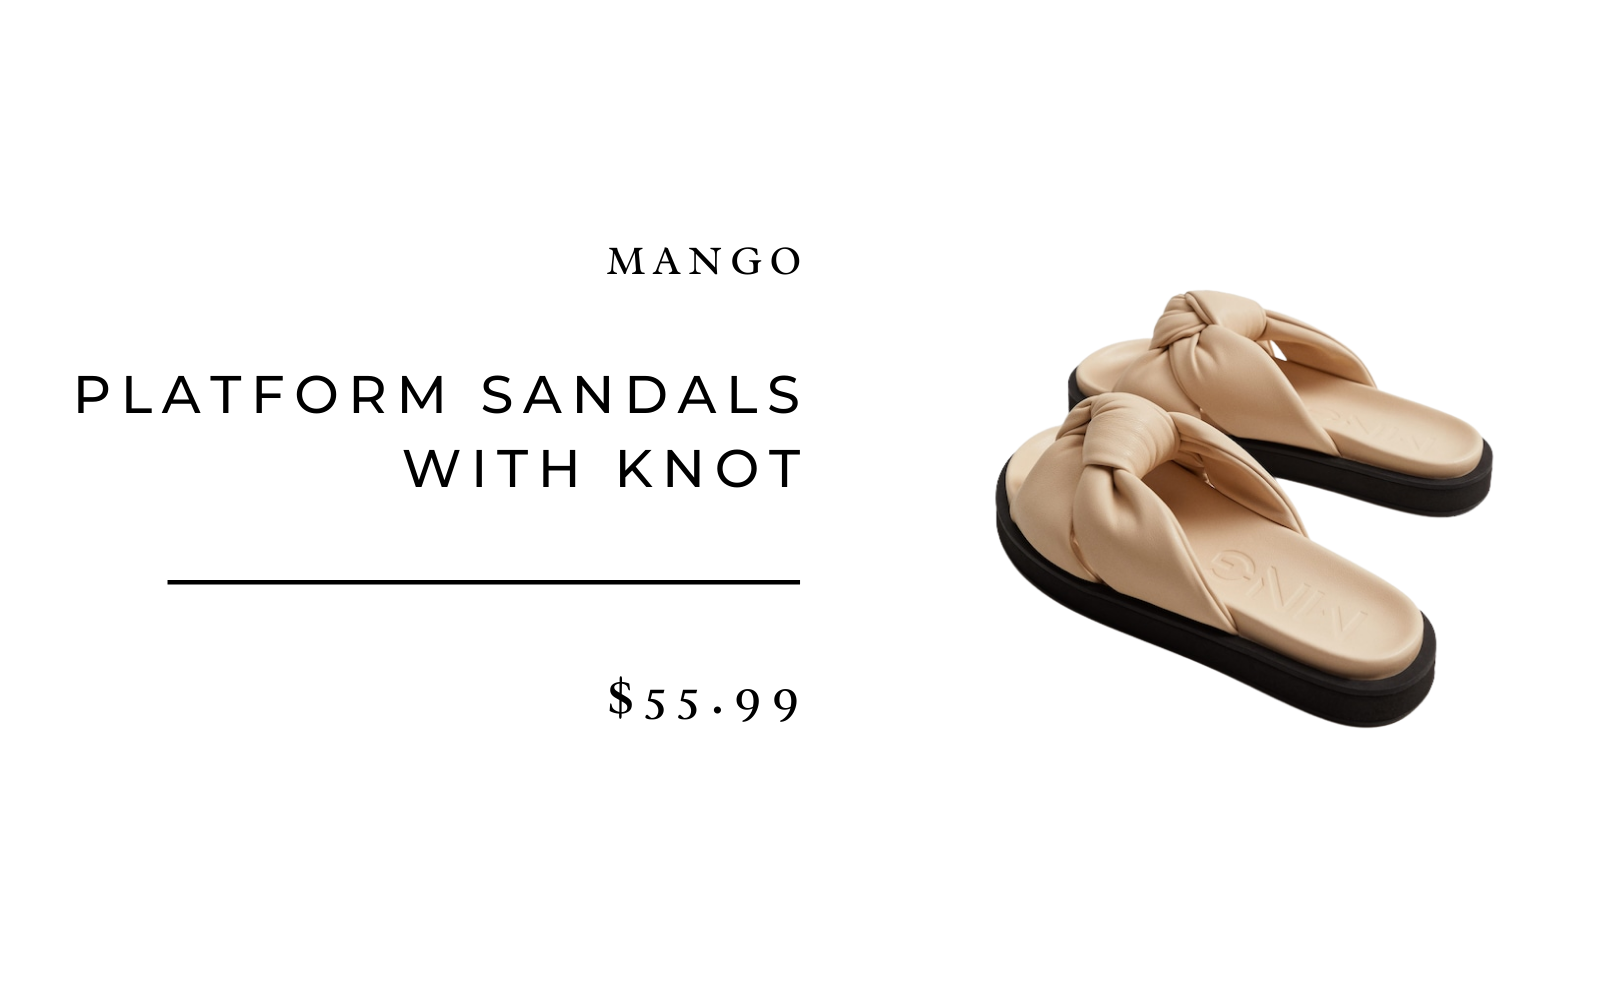 Mango Platform Sandals with Knot